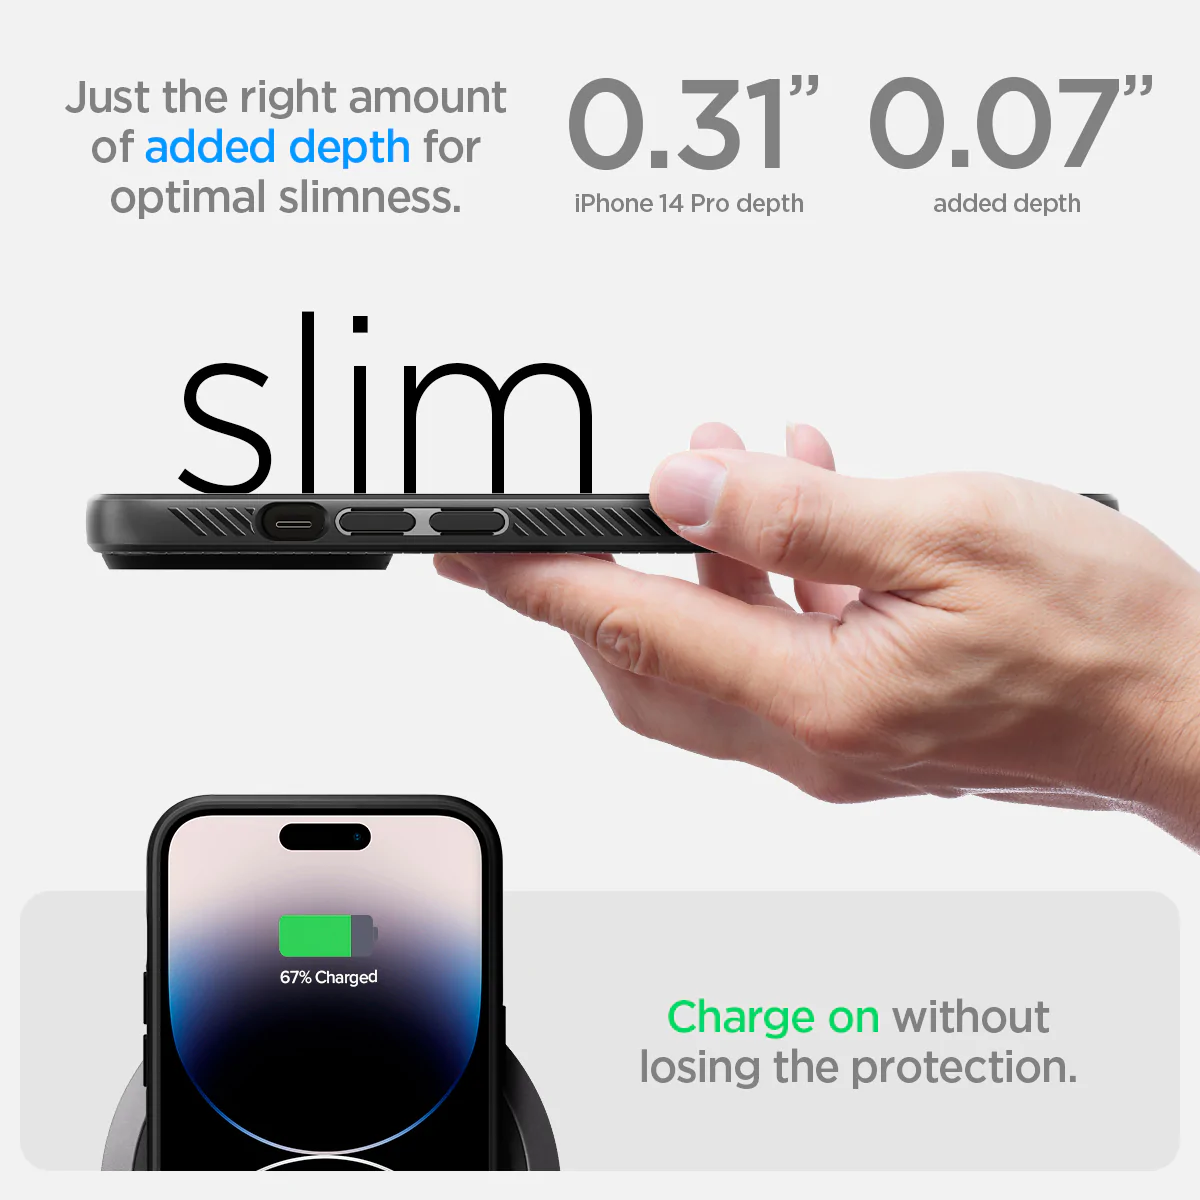 Spigen iPhone 14 Pro Liquid Air Series-Matte Black